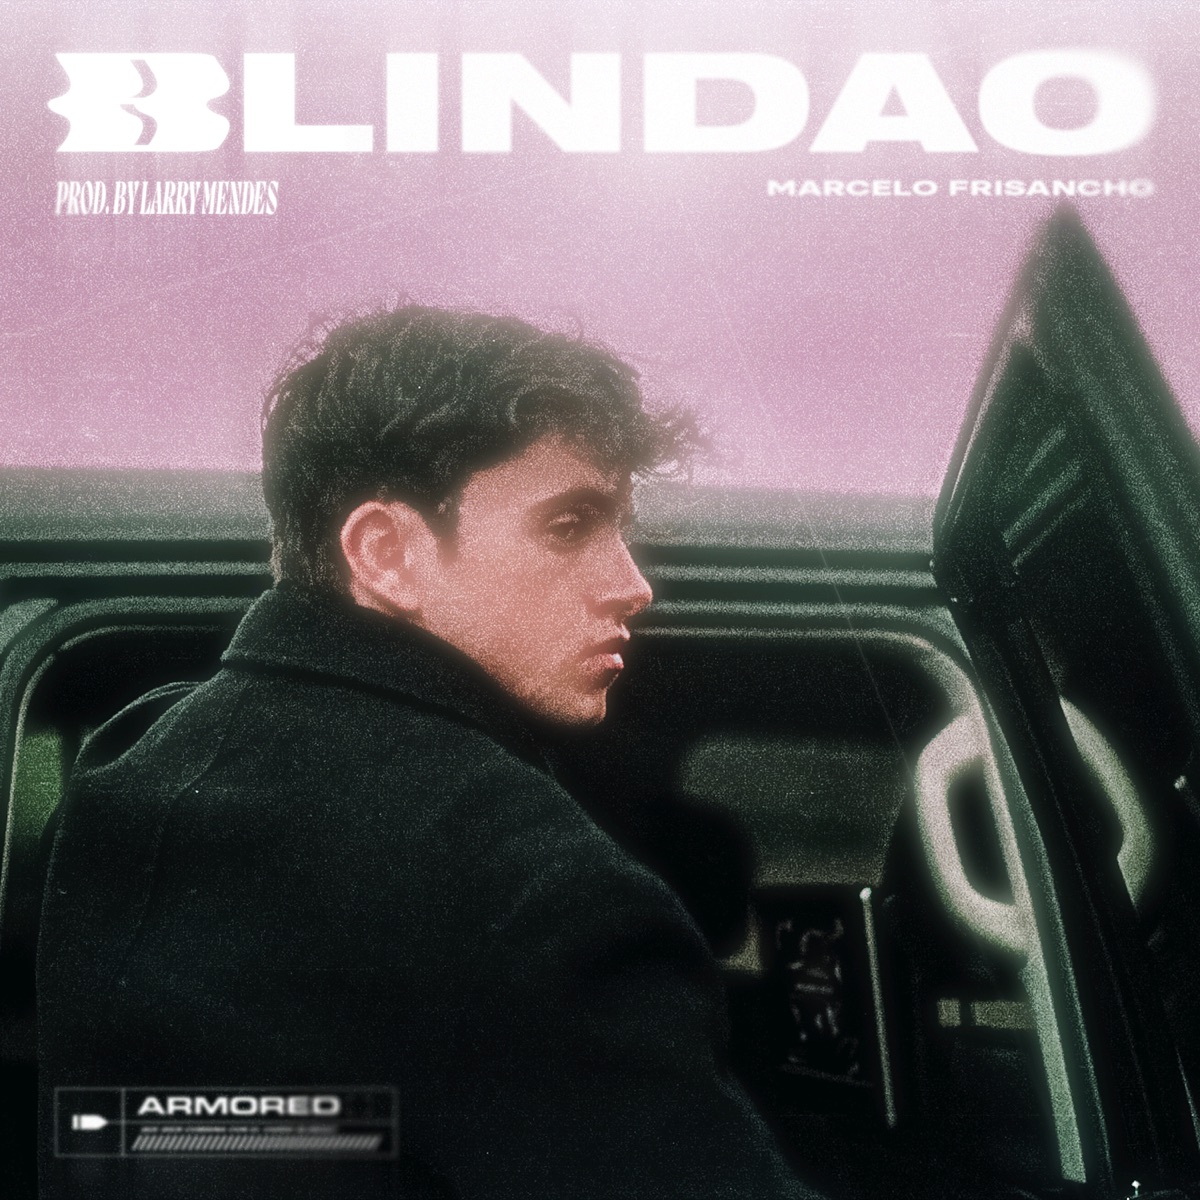 Blindao - Single - Album by Marcelo Frisancho & Larry Mendes - Apple Music